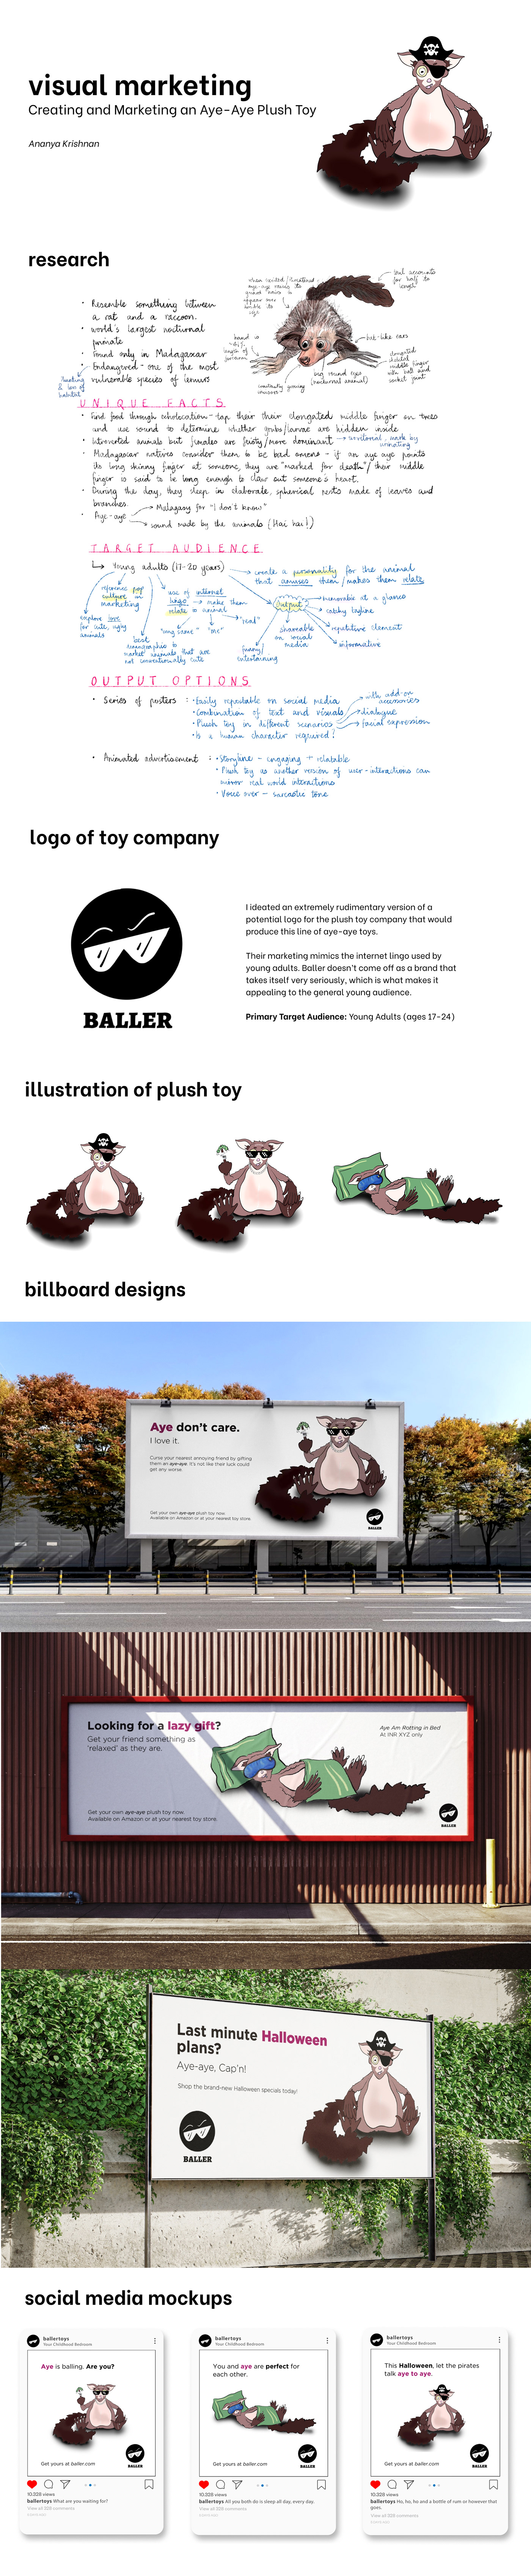 marketing   mockups Adobe Photoshop plush toy ILLUSTRATION  social media Advertising  brand billboard design